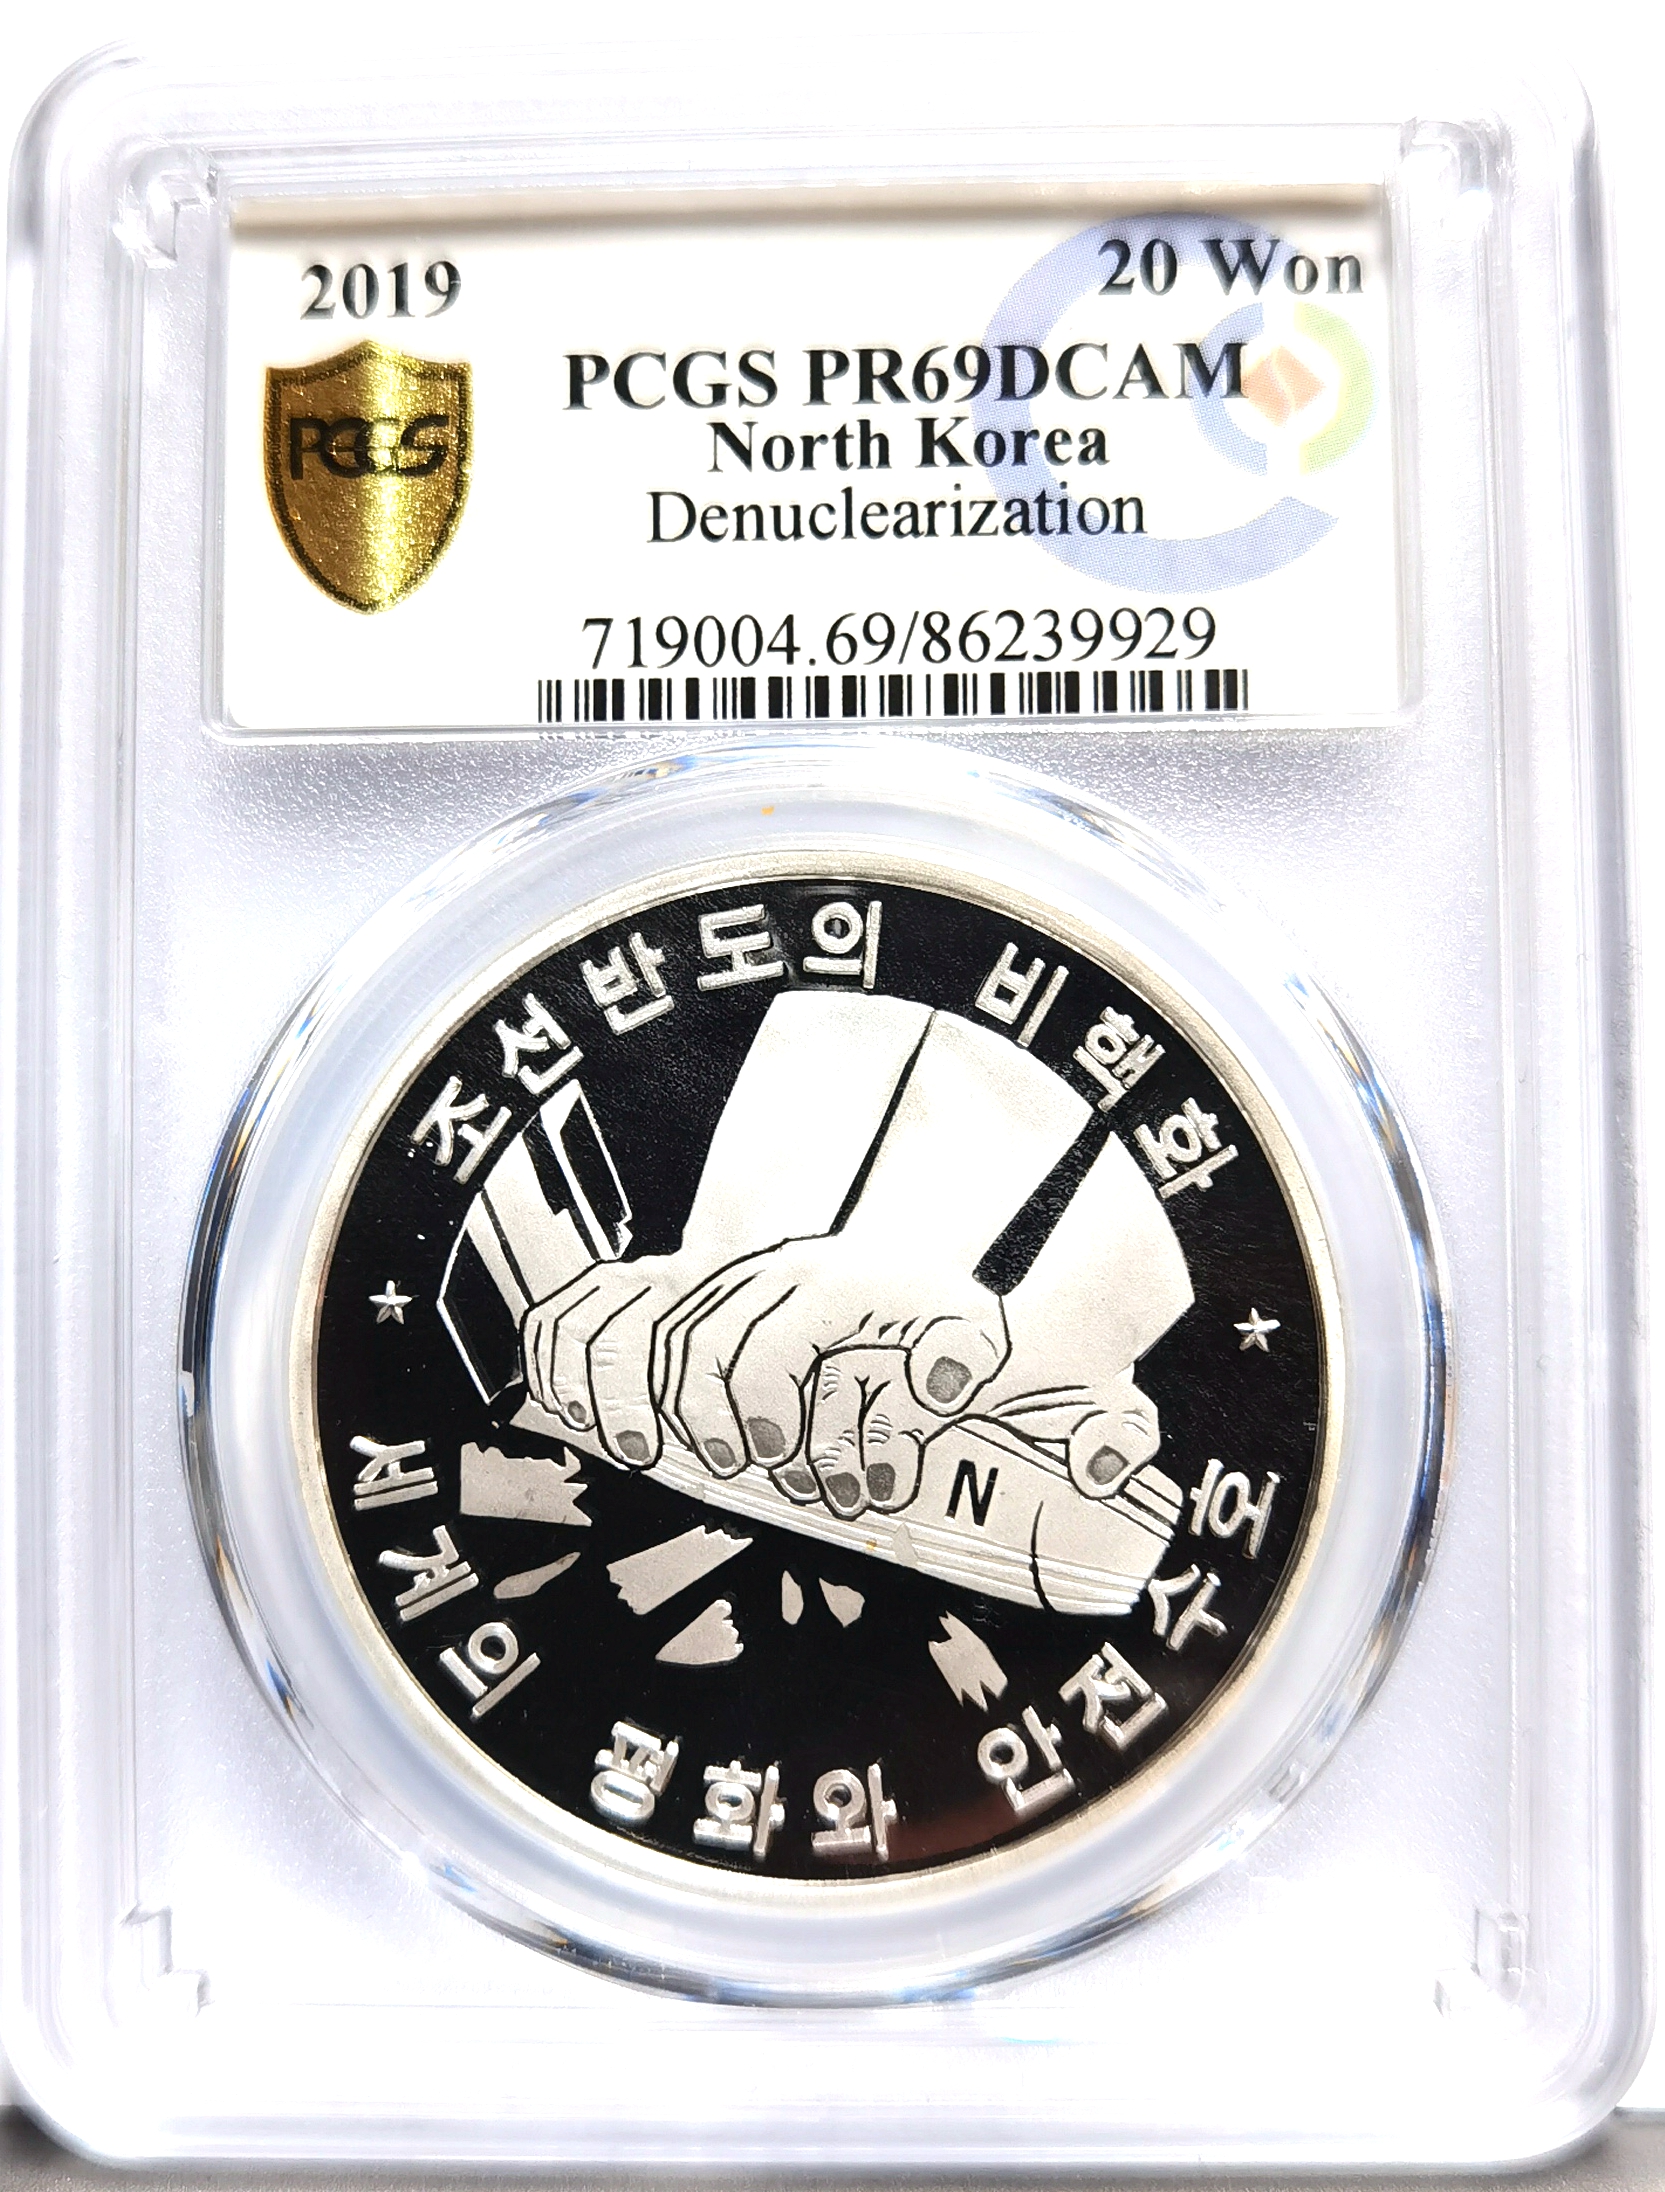 L3618, Korea "Korean Denuclearization" Silver Coin 2019, PCGS PR69